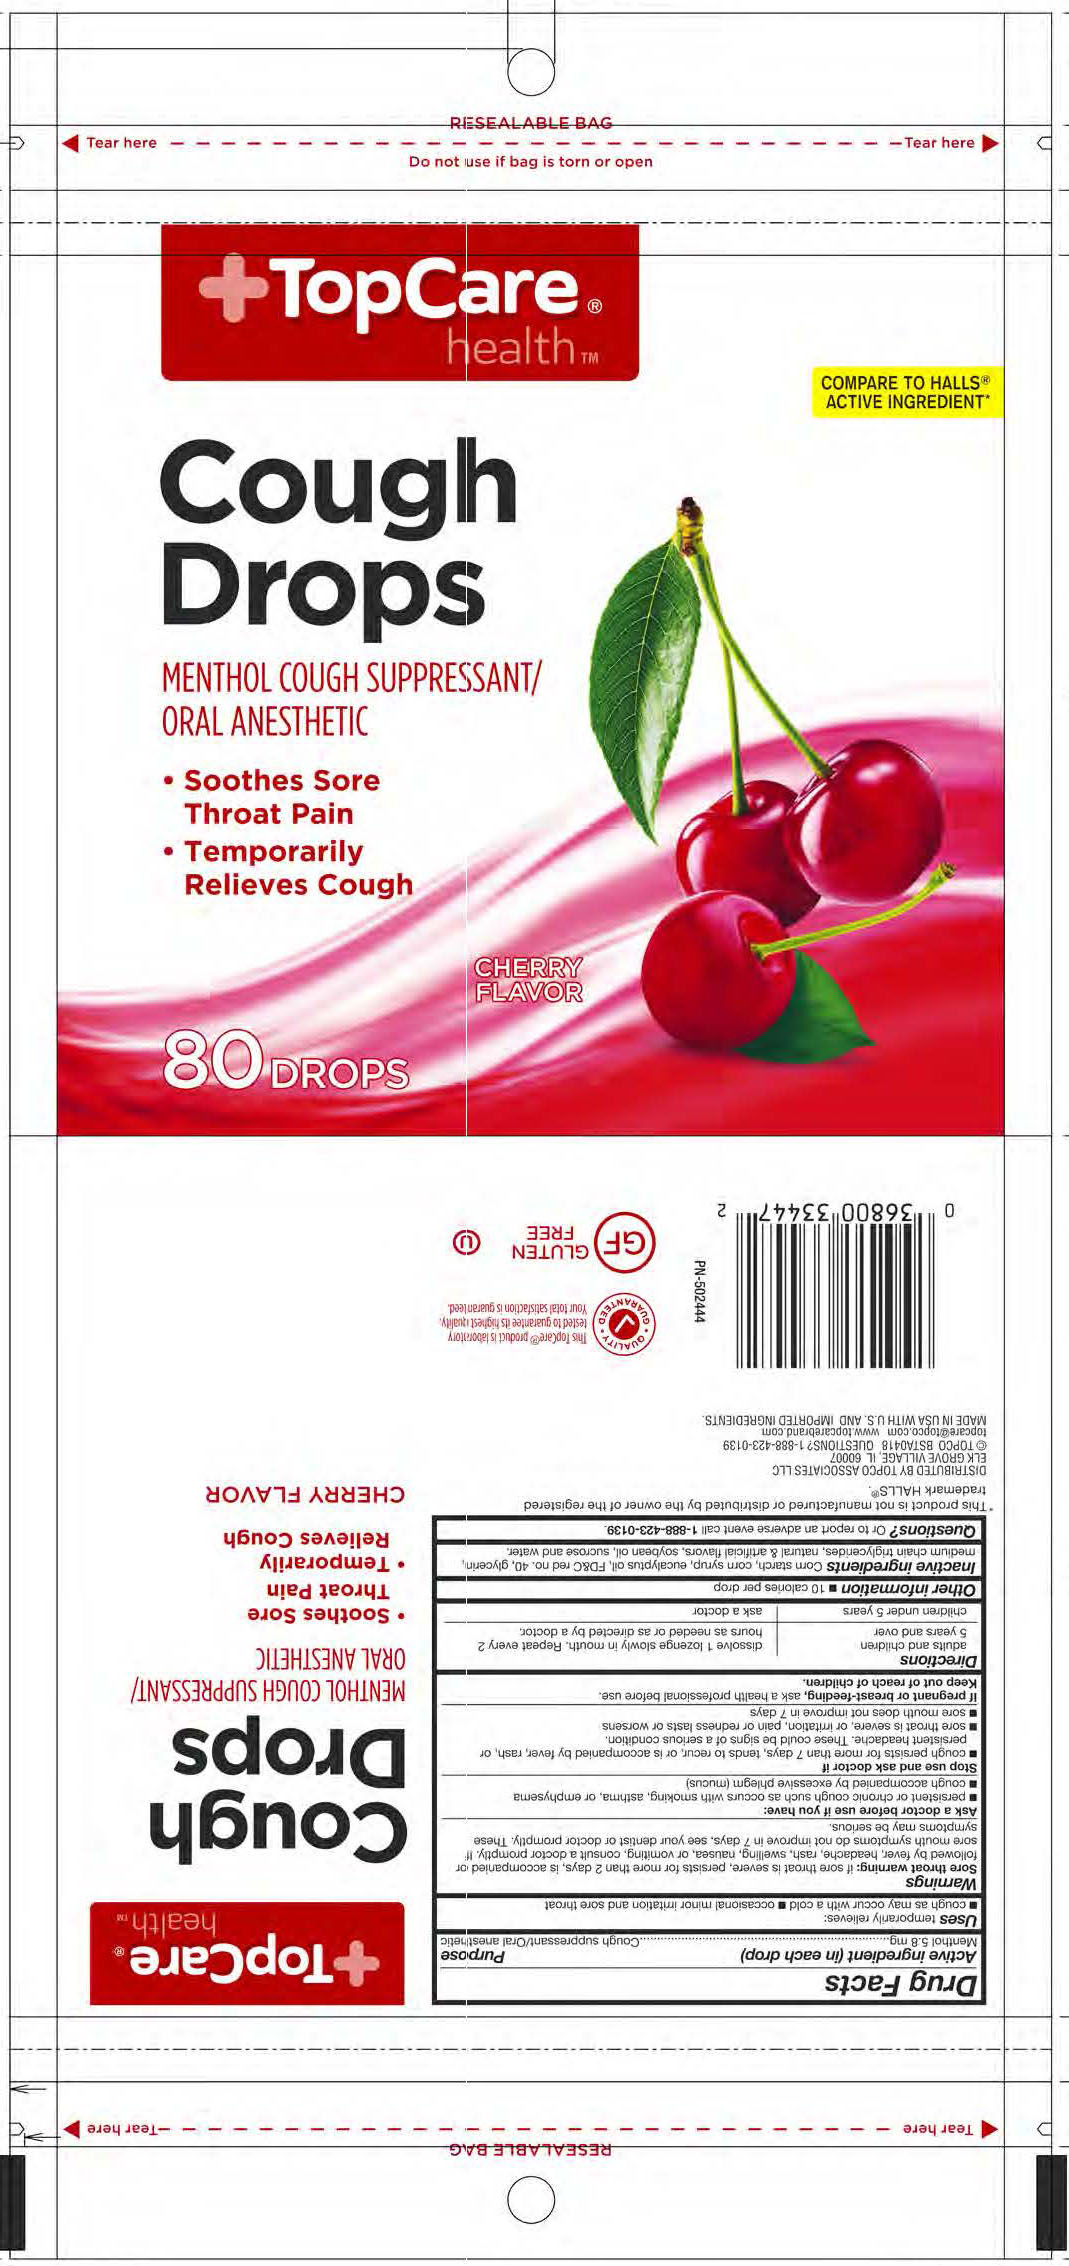 TopCare Cherry 80ct Cough Drops